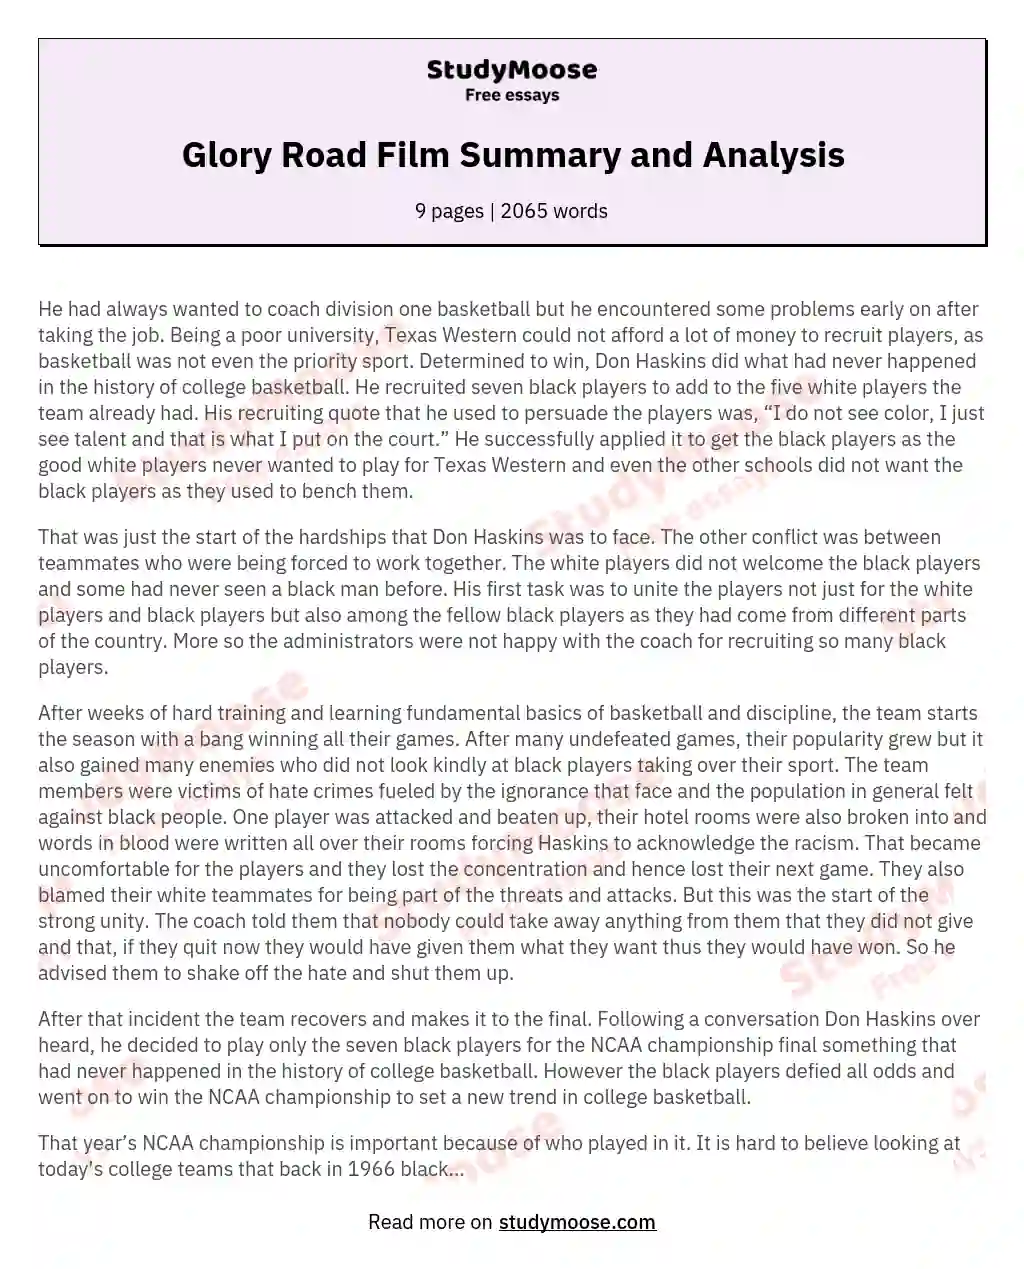 Glory Road Film Summary and Analysis essay